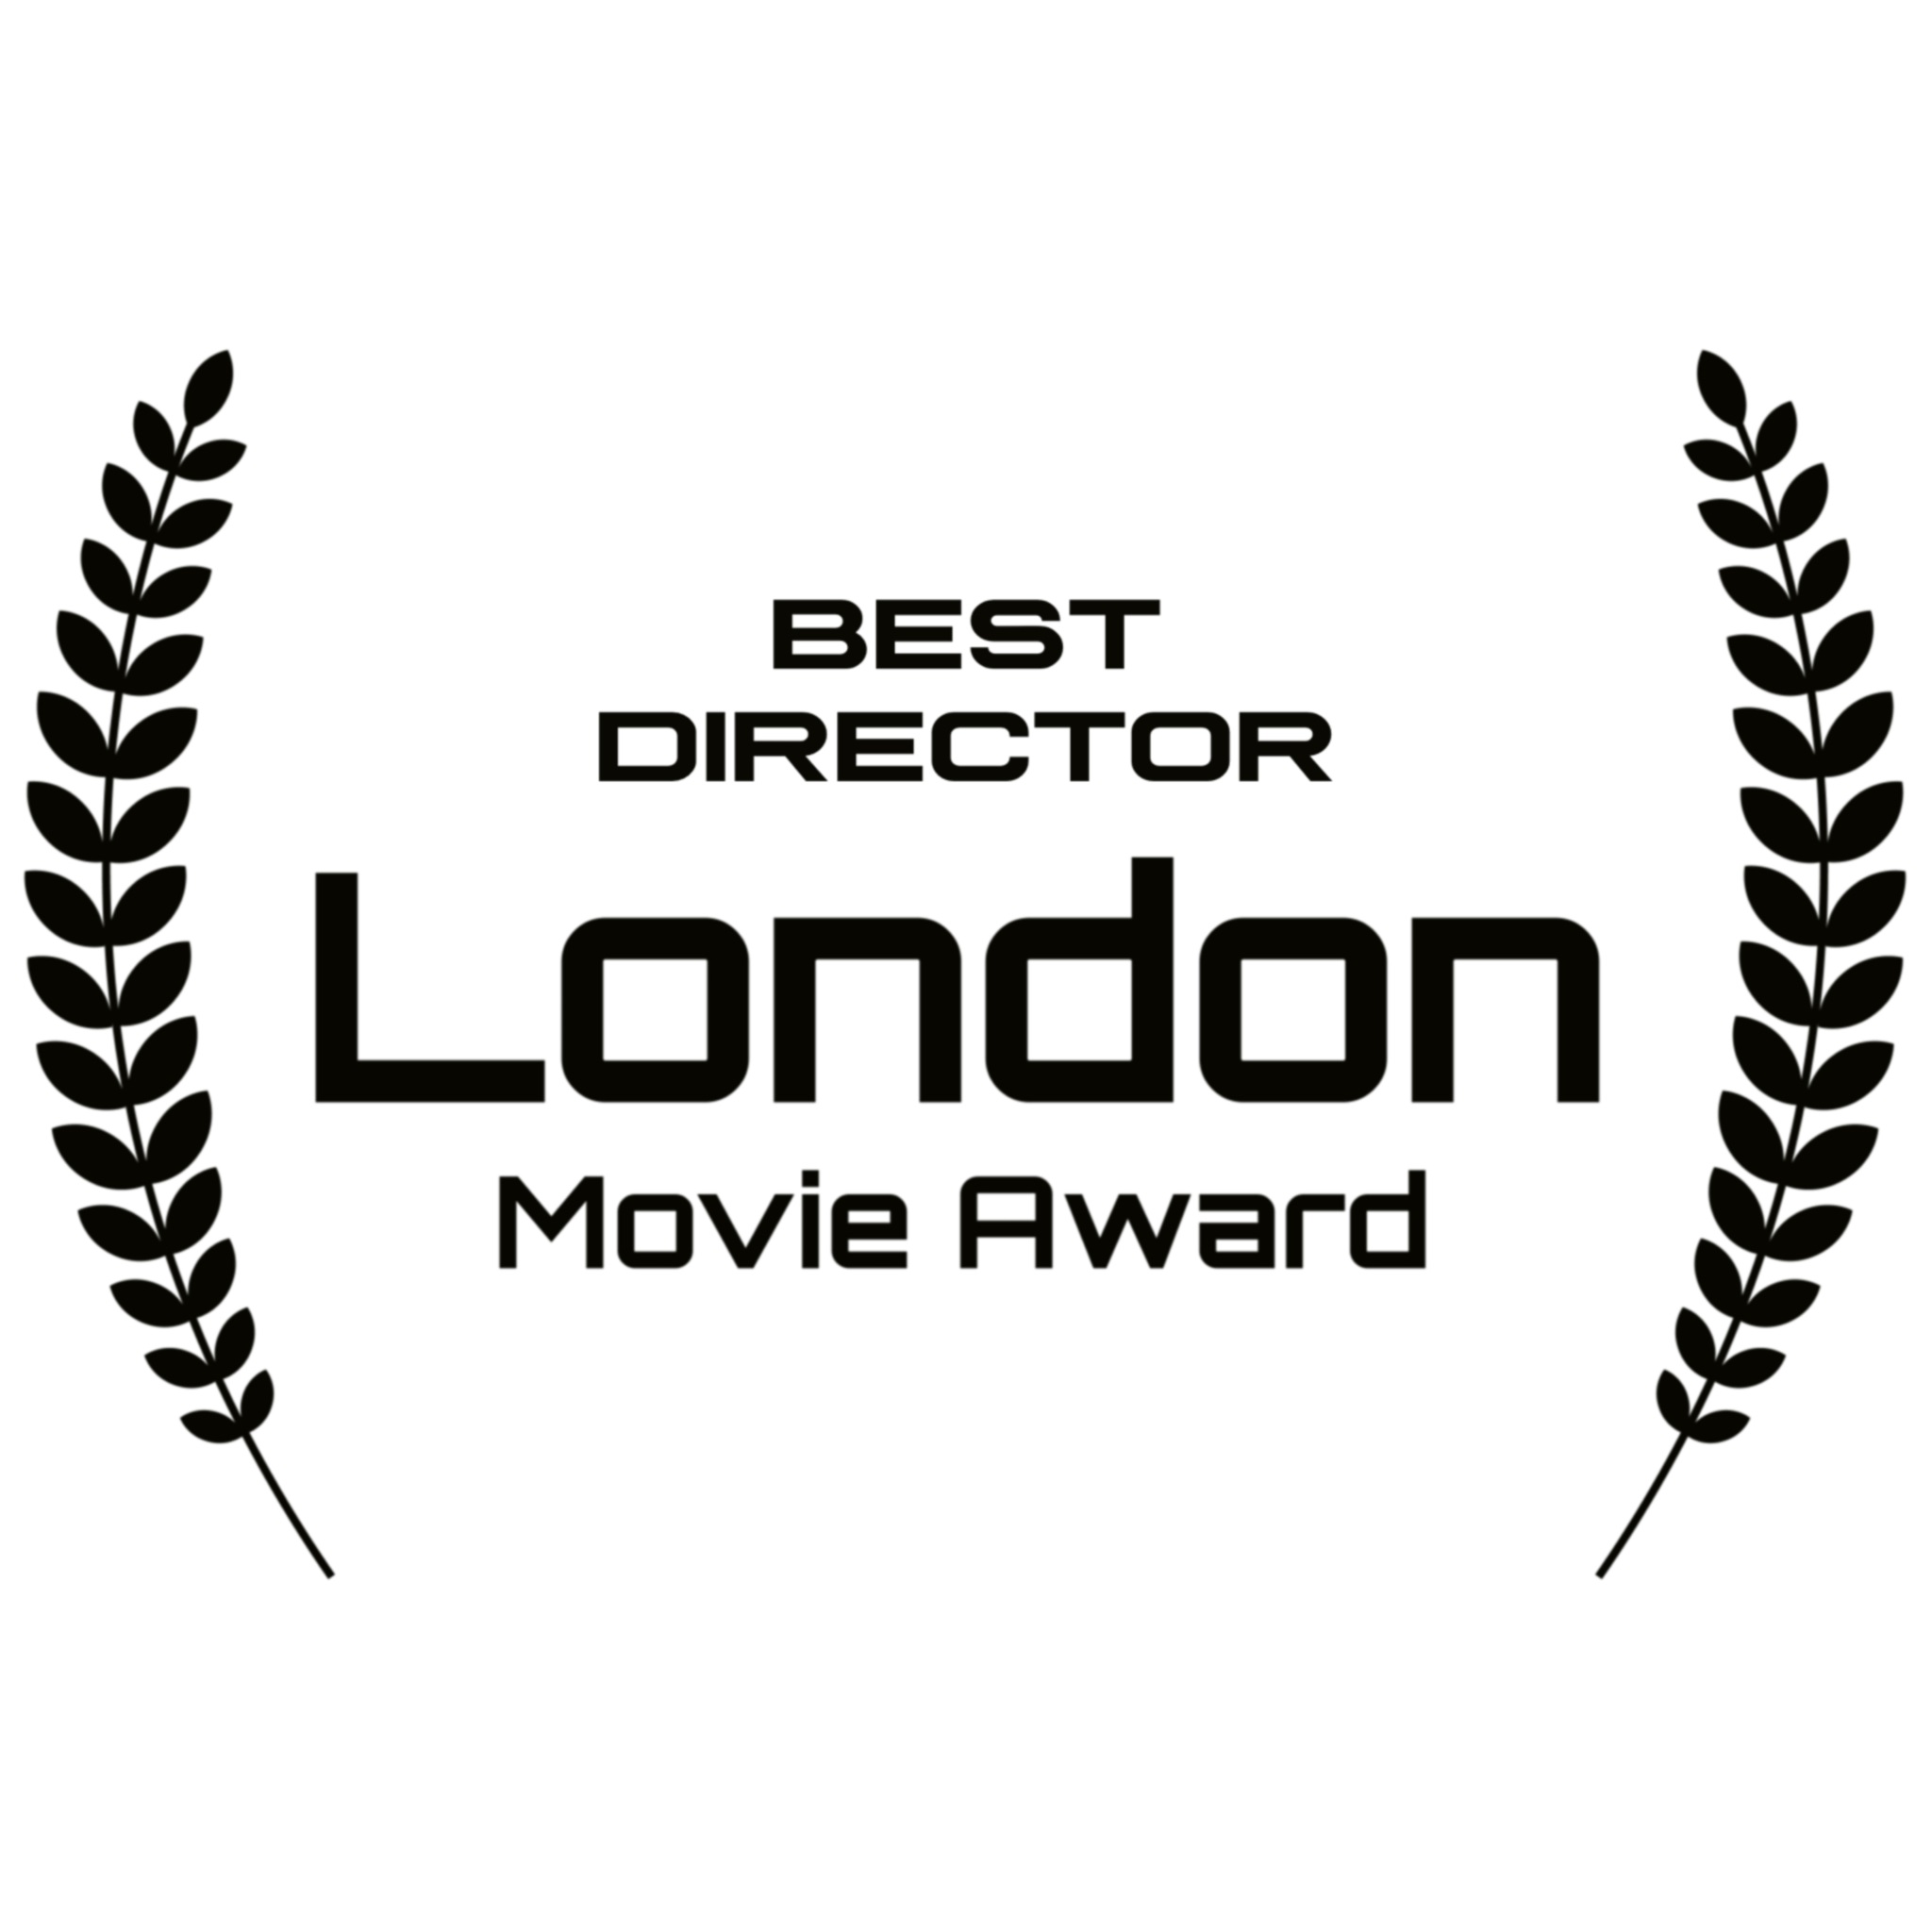 BEST DIRECTOR - LONDON MOVIE AWARD